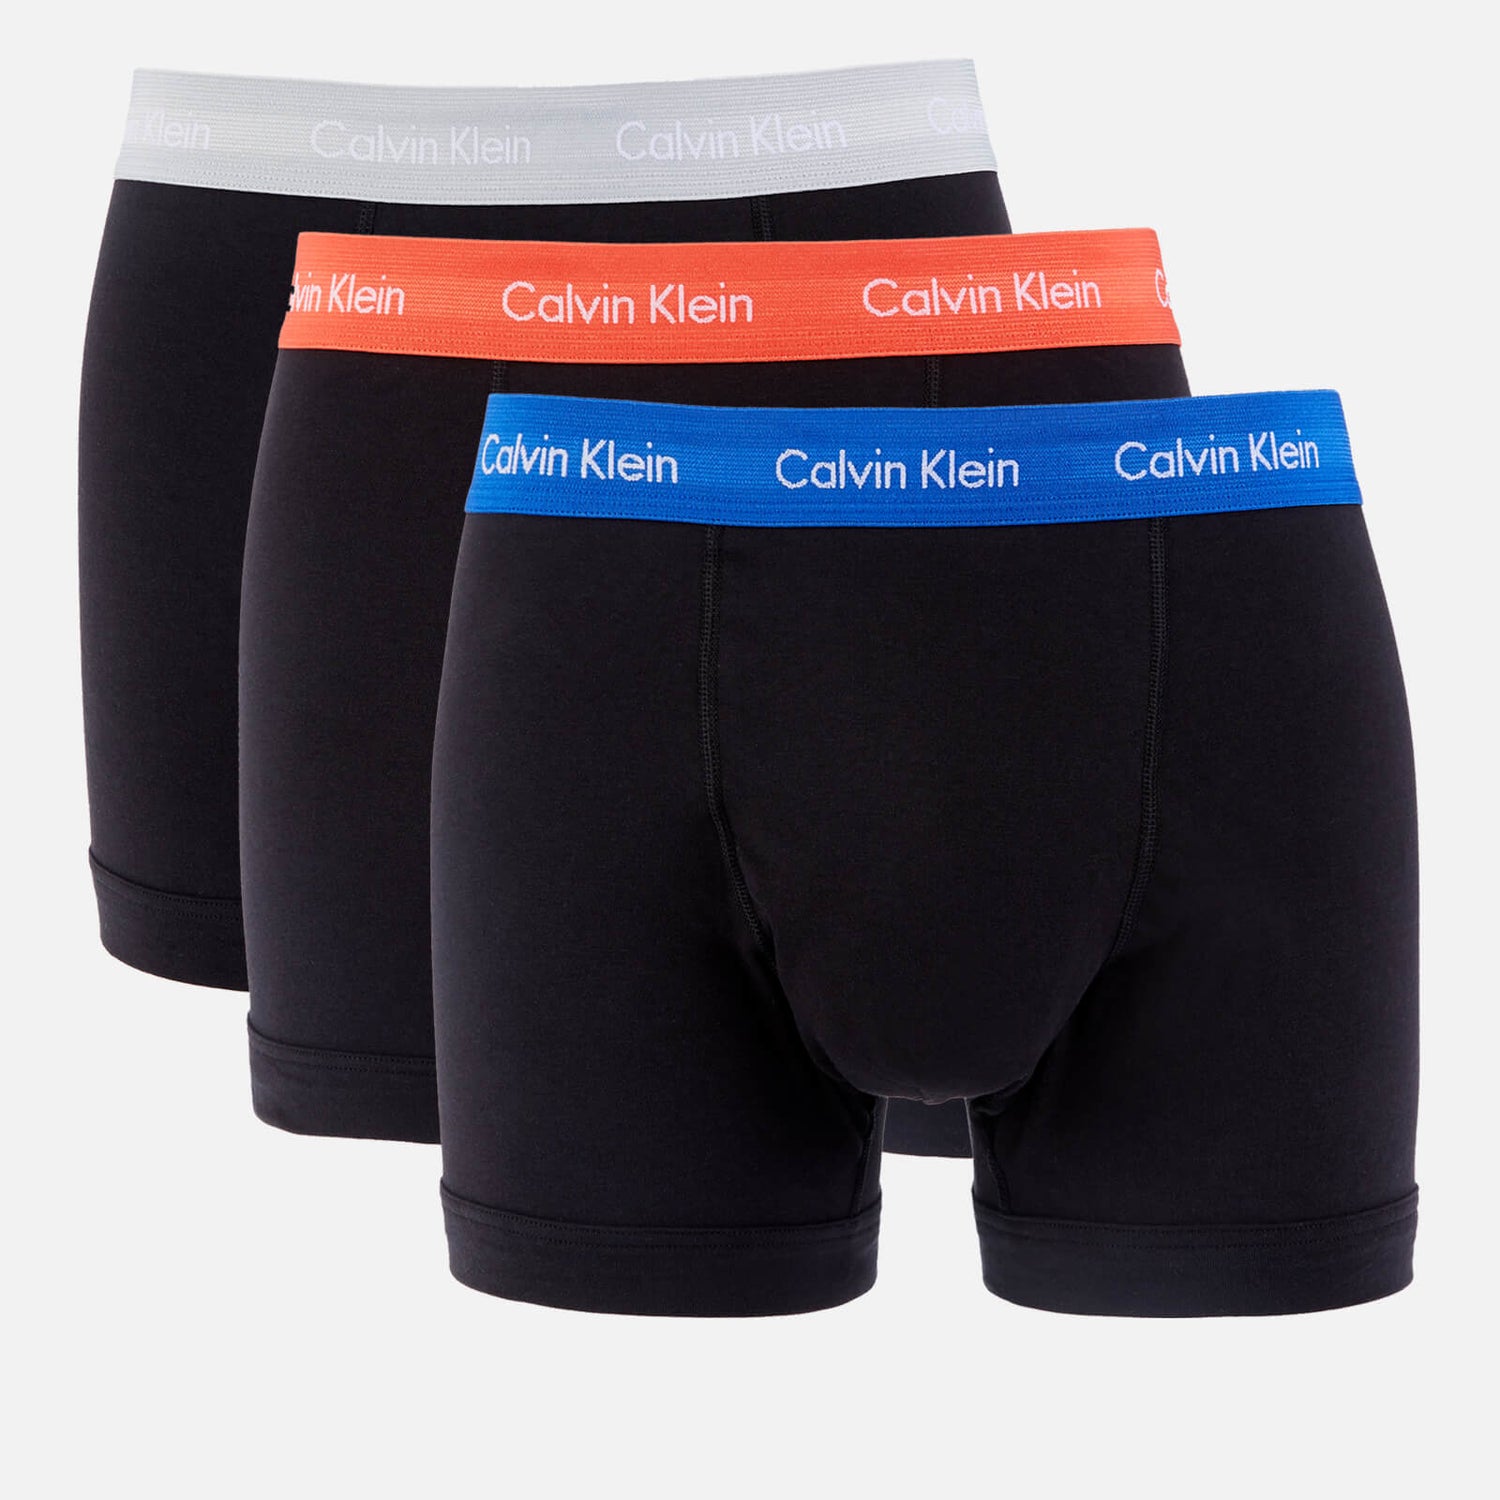 Calvin Klein Men's 3 Pack Trunk Boxer Shorts - Royalty/Grey/Exotic Coral